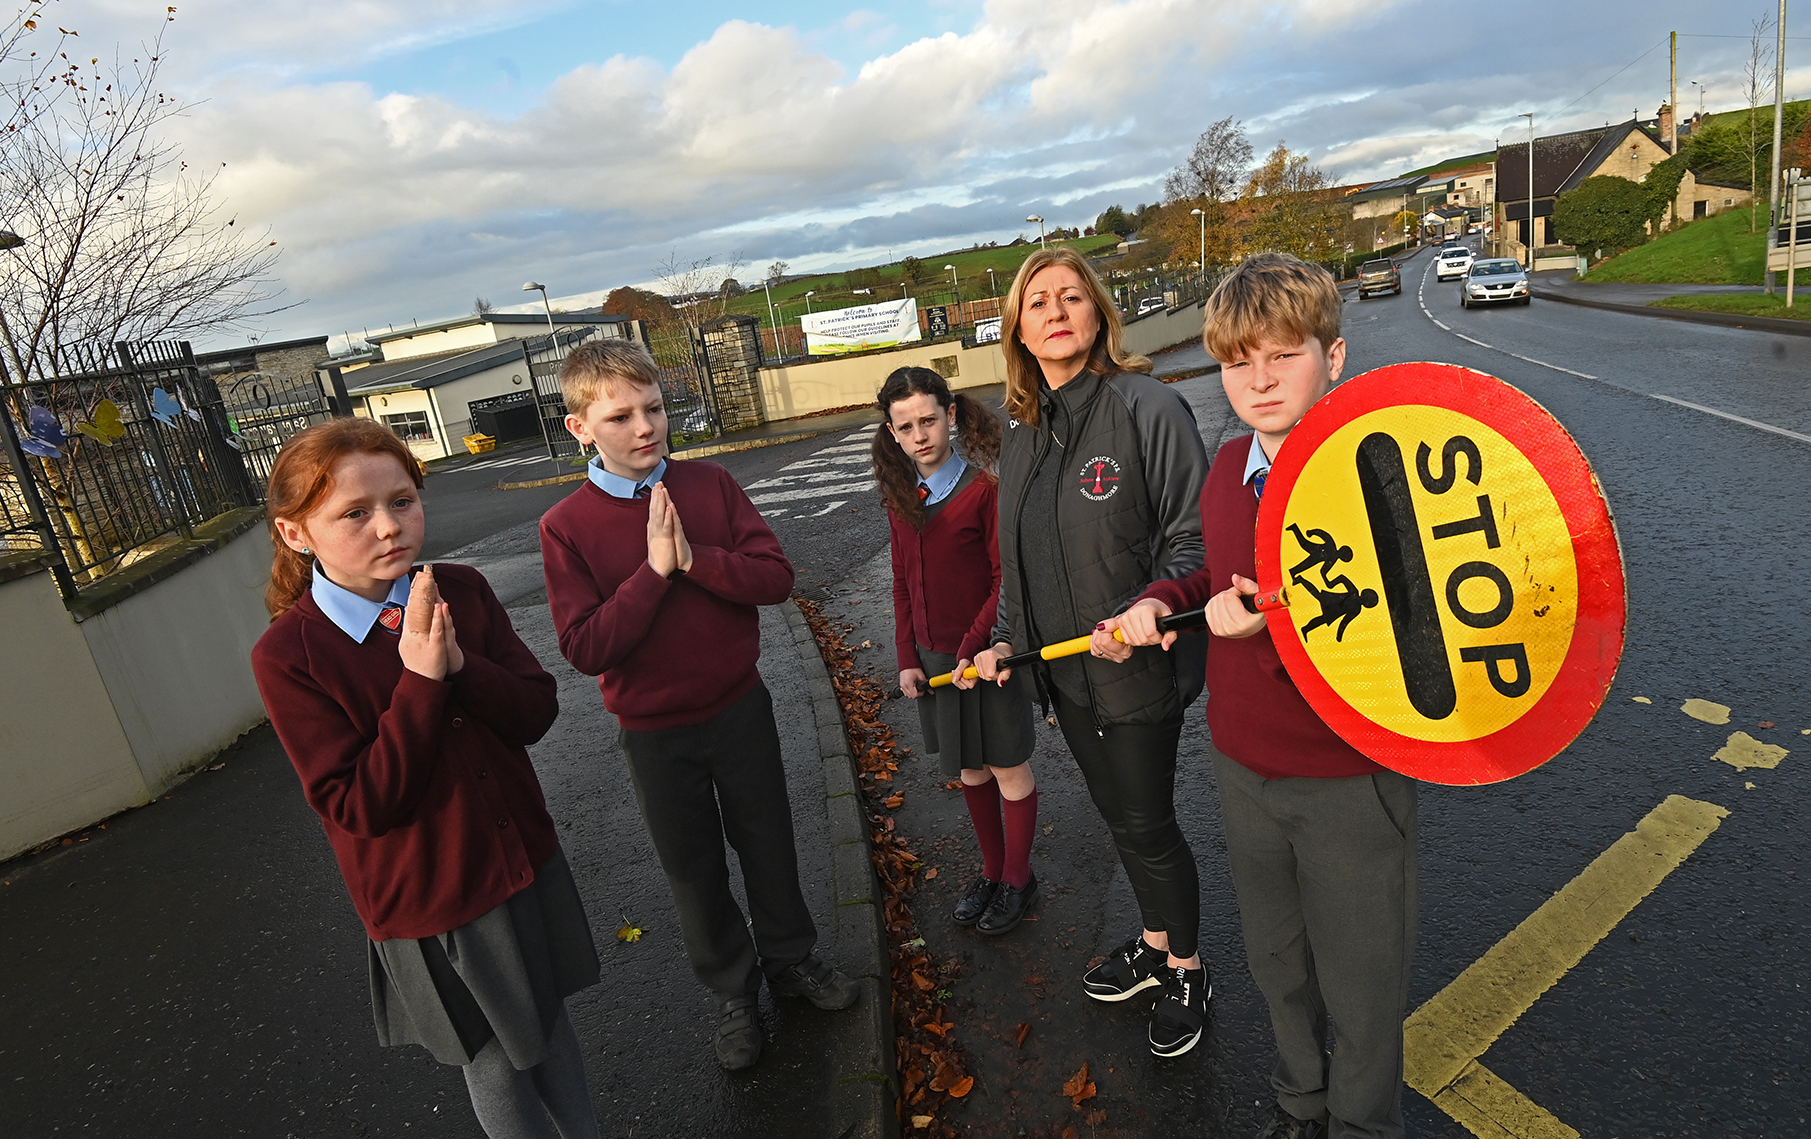 Principal’s plea after pupils narrowly escape tractor smash in Donaghmore